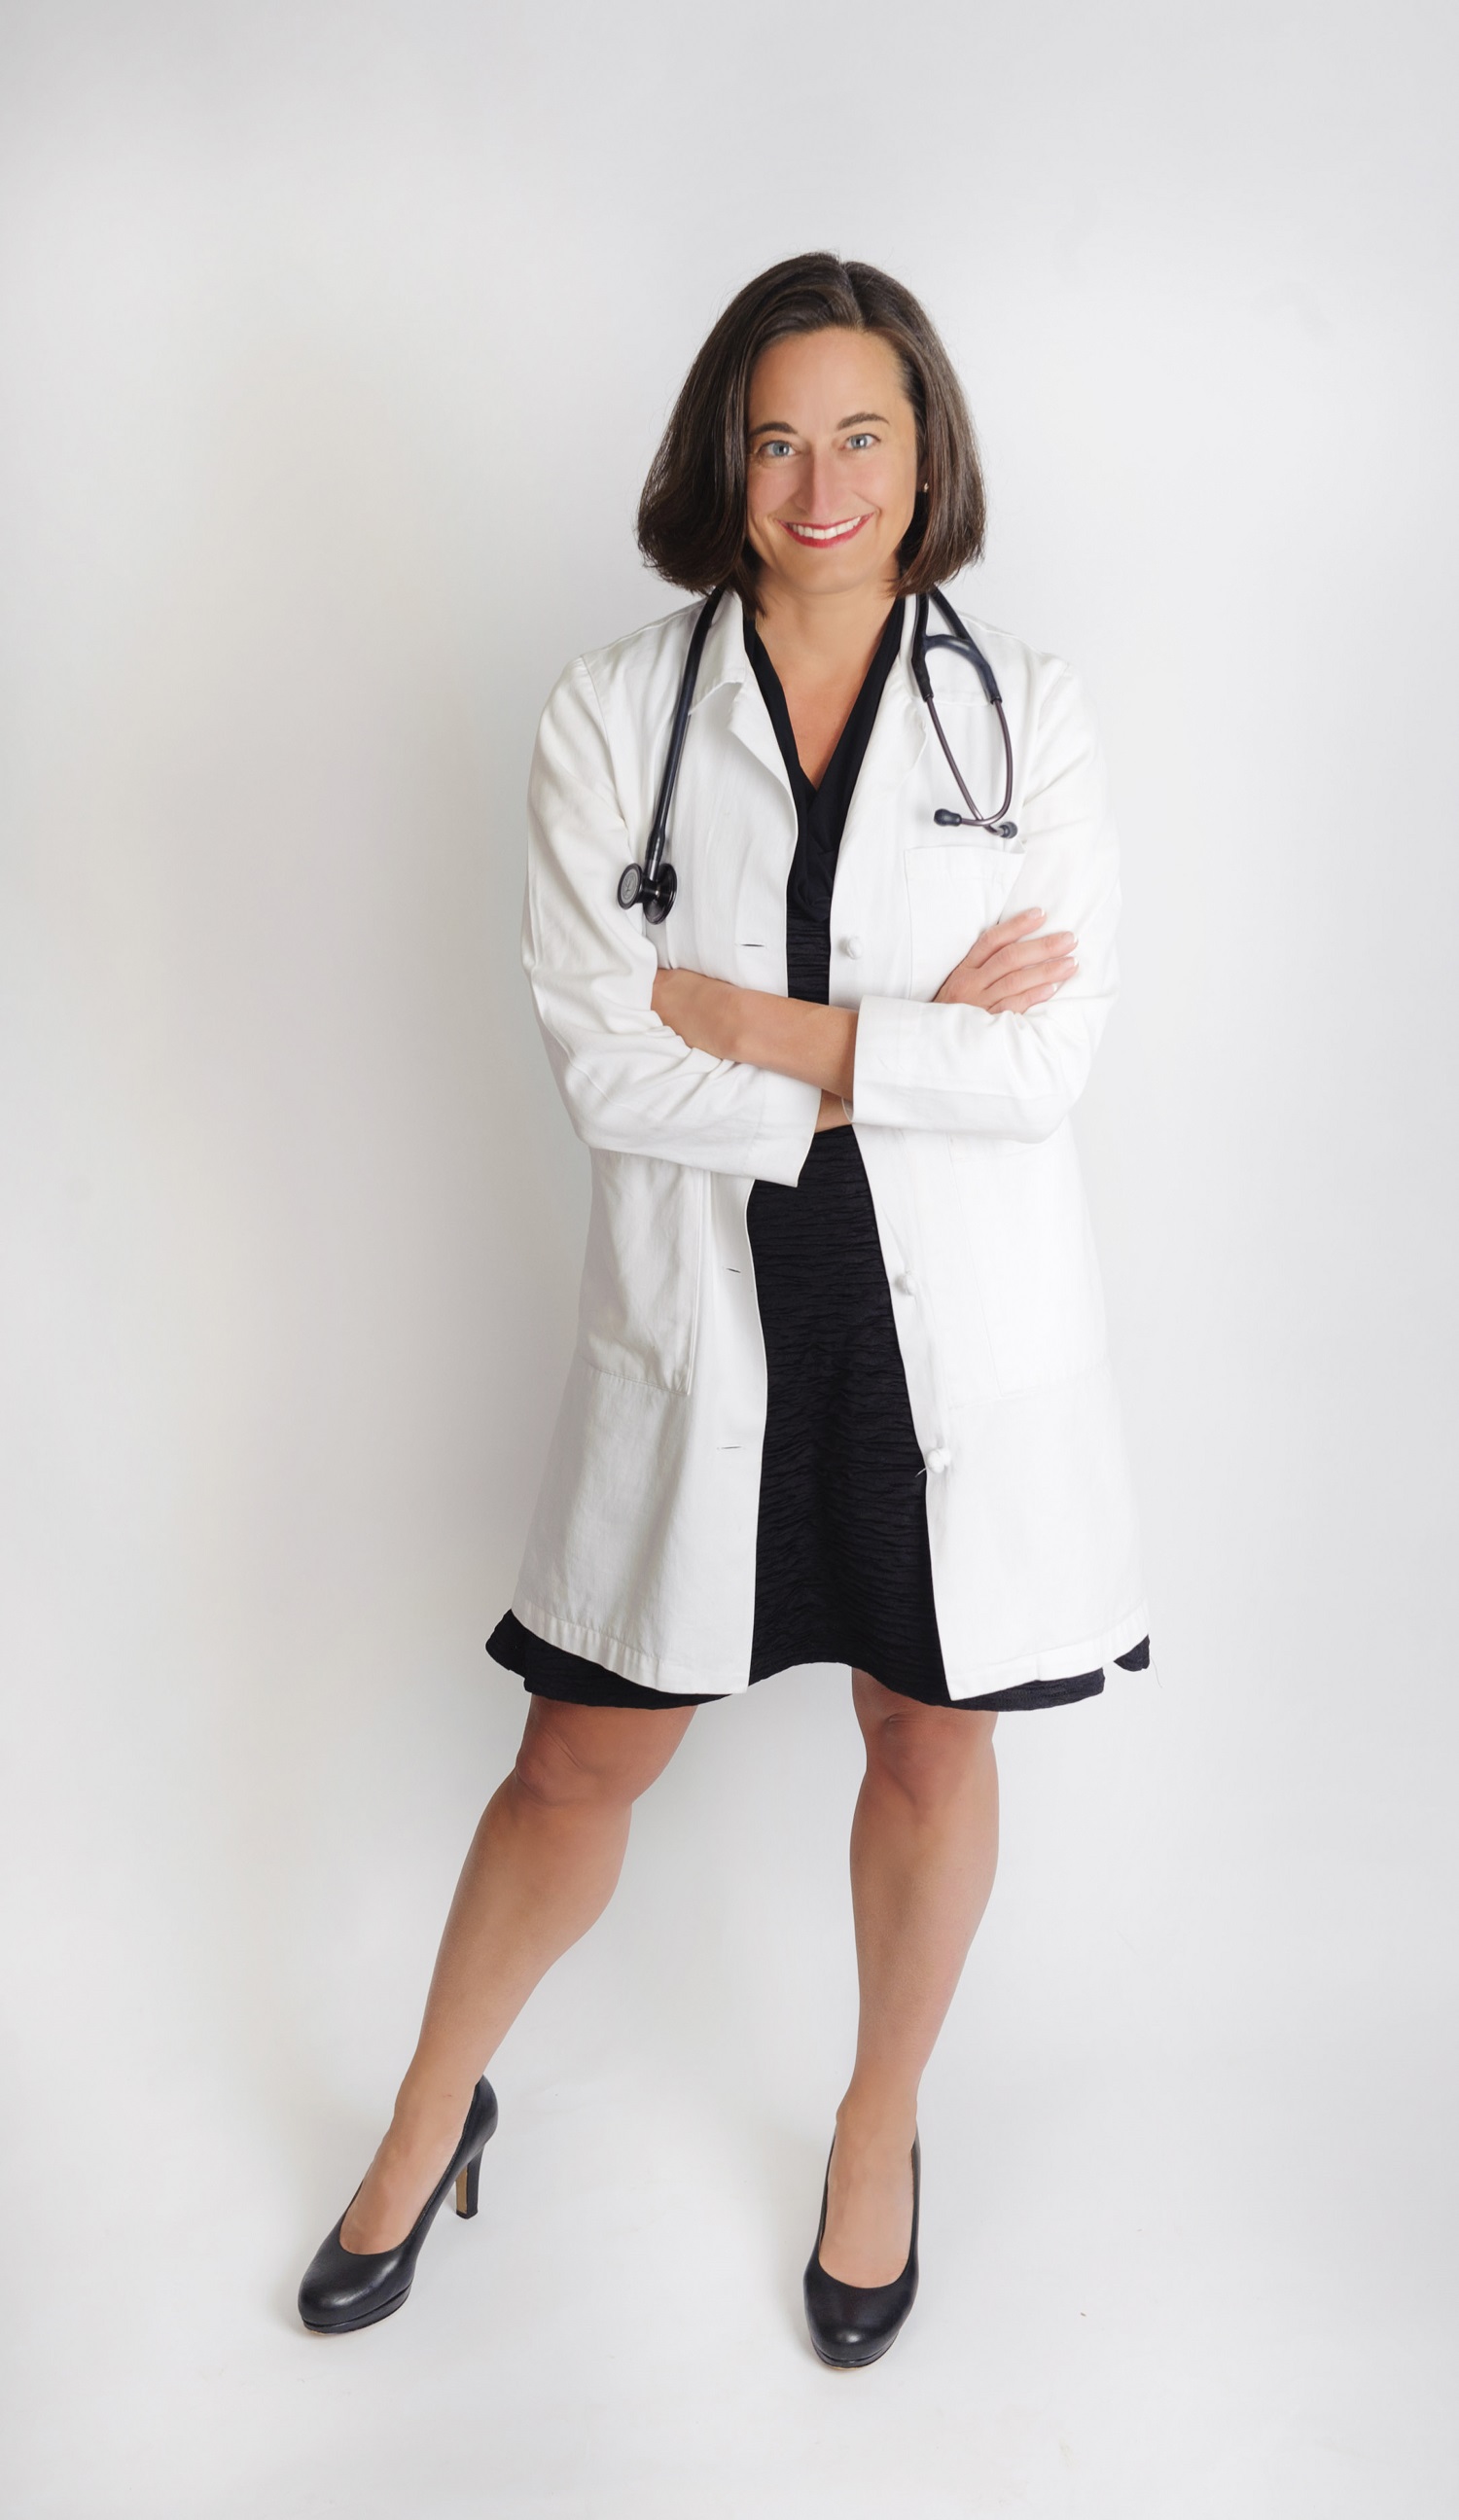 Dr. Kathryn Retzler / 'HormoneSynergy'